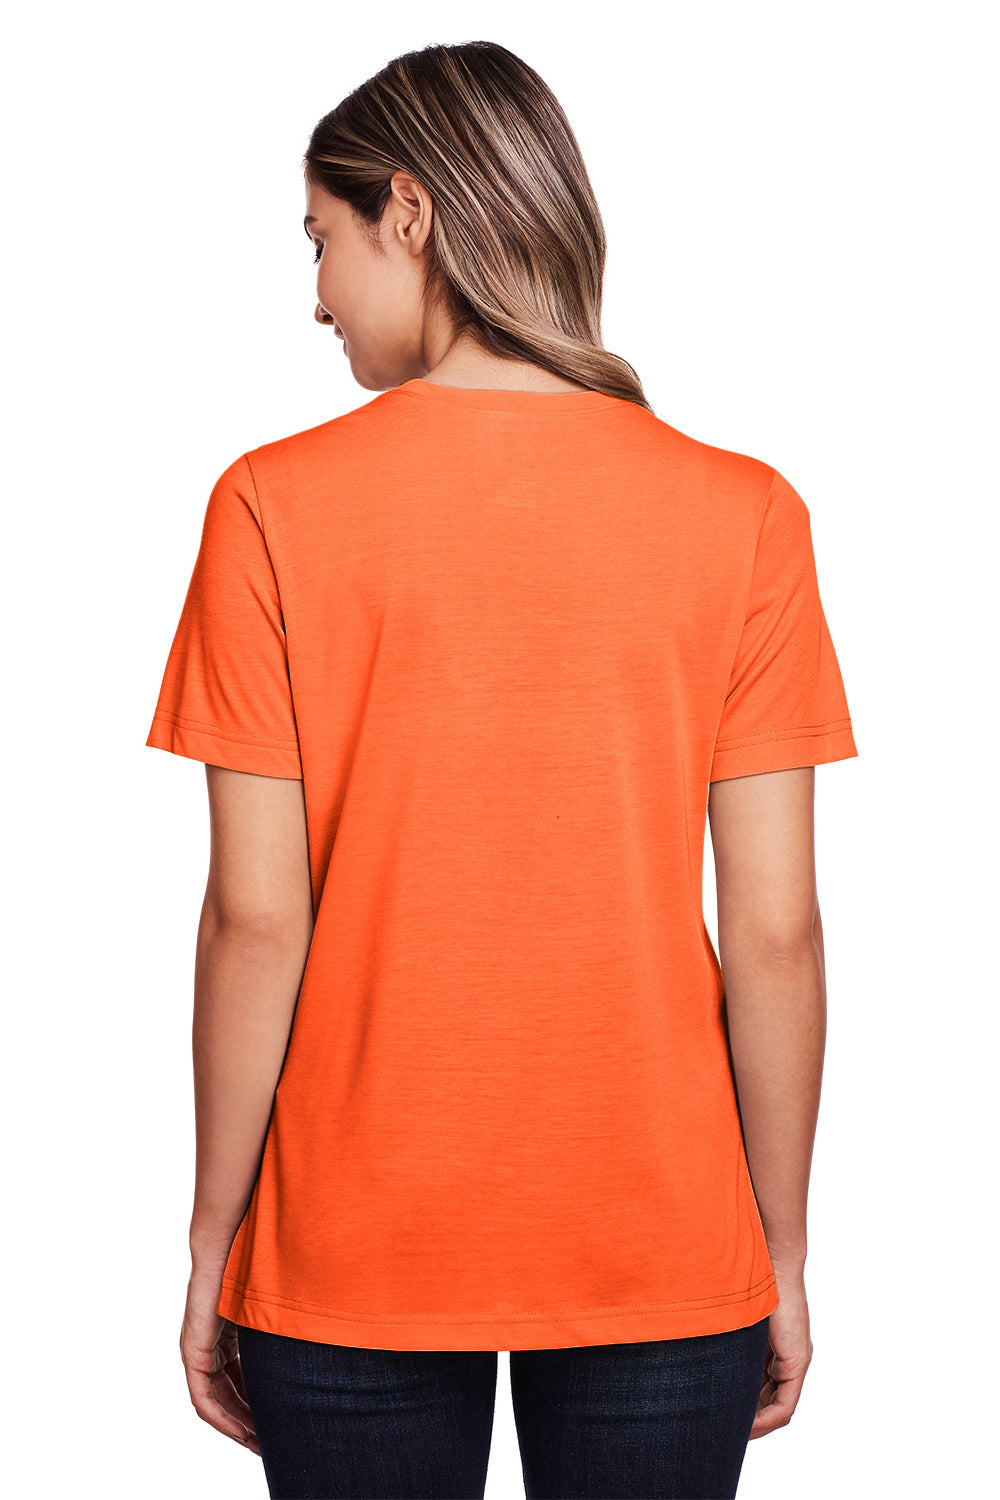 Core 365 CE111W Womens Fusion ChromaSoft Performance Moisture Wicking Short Sleeve Scoop Neck T-Shirt Orange Back